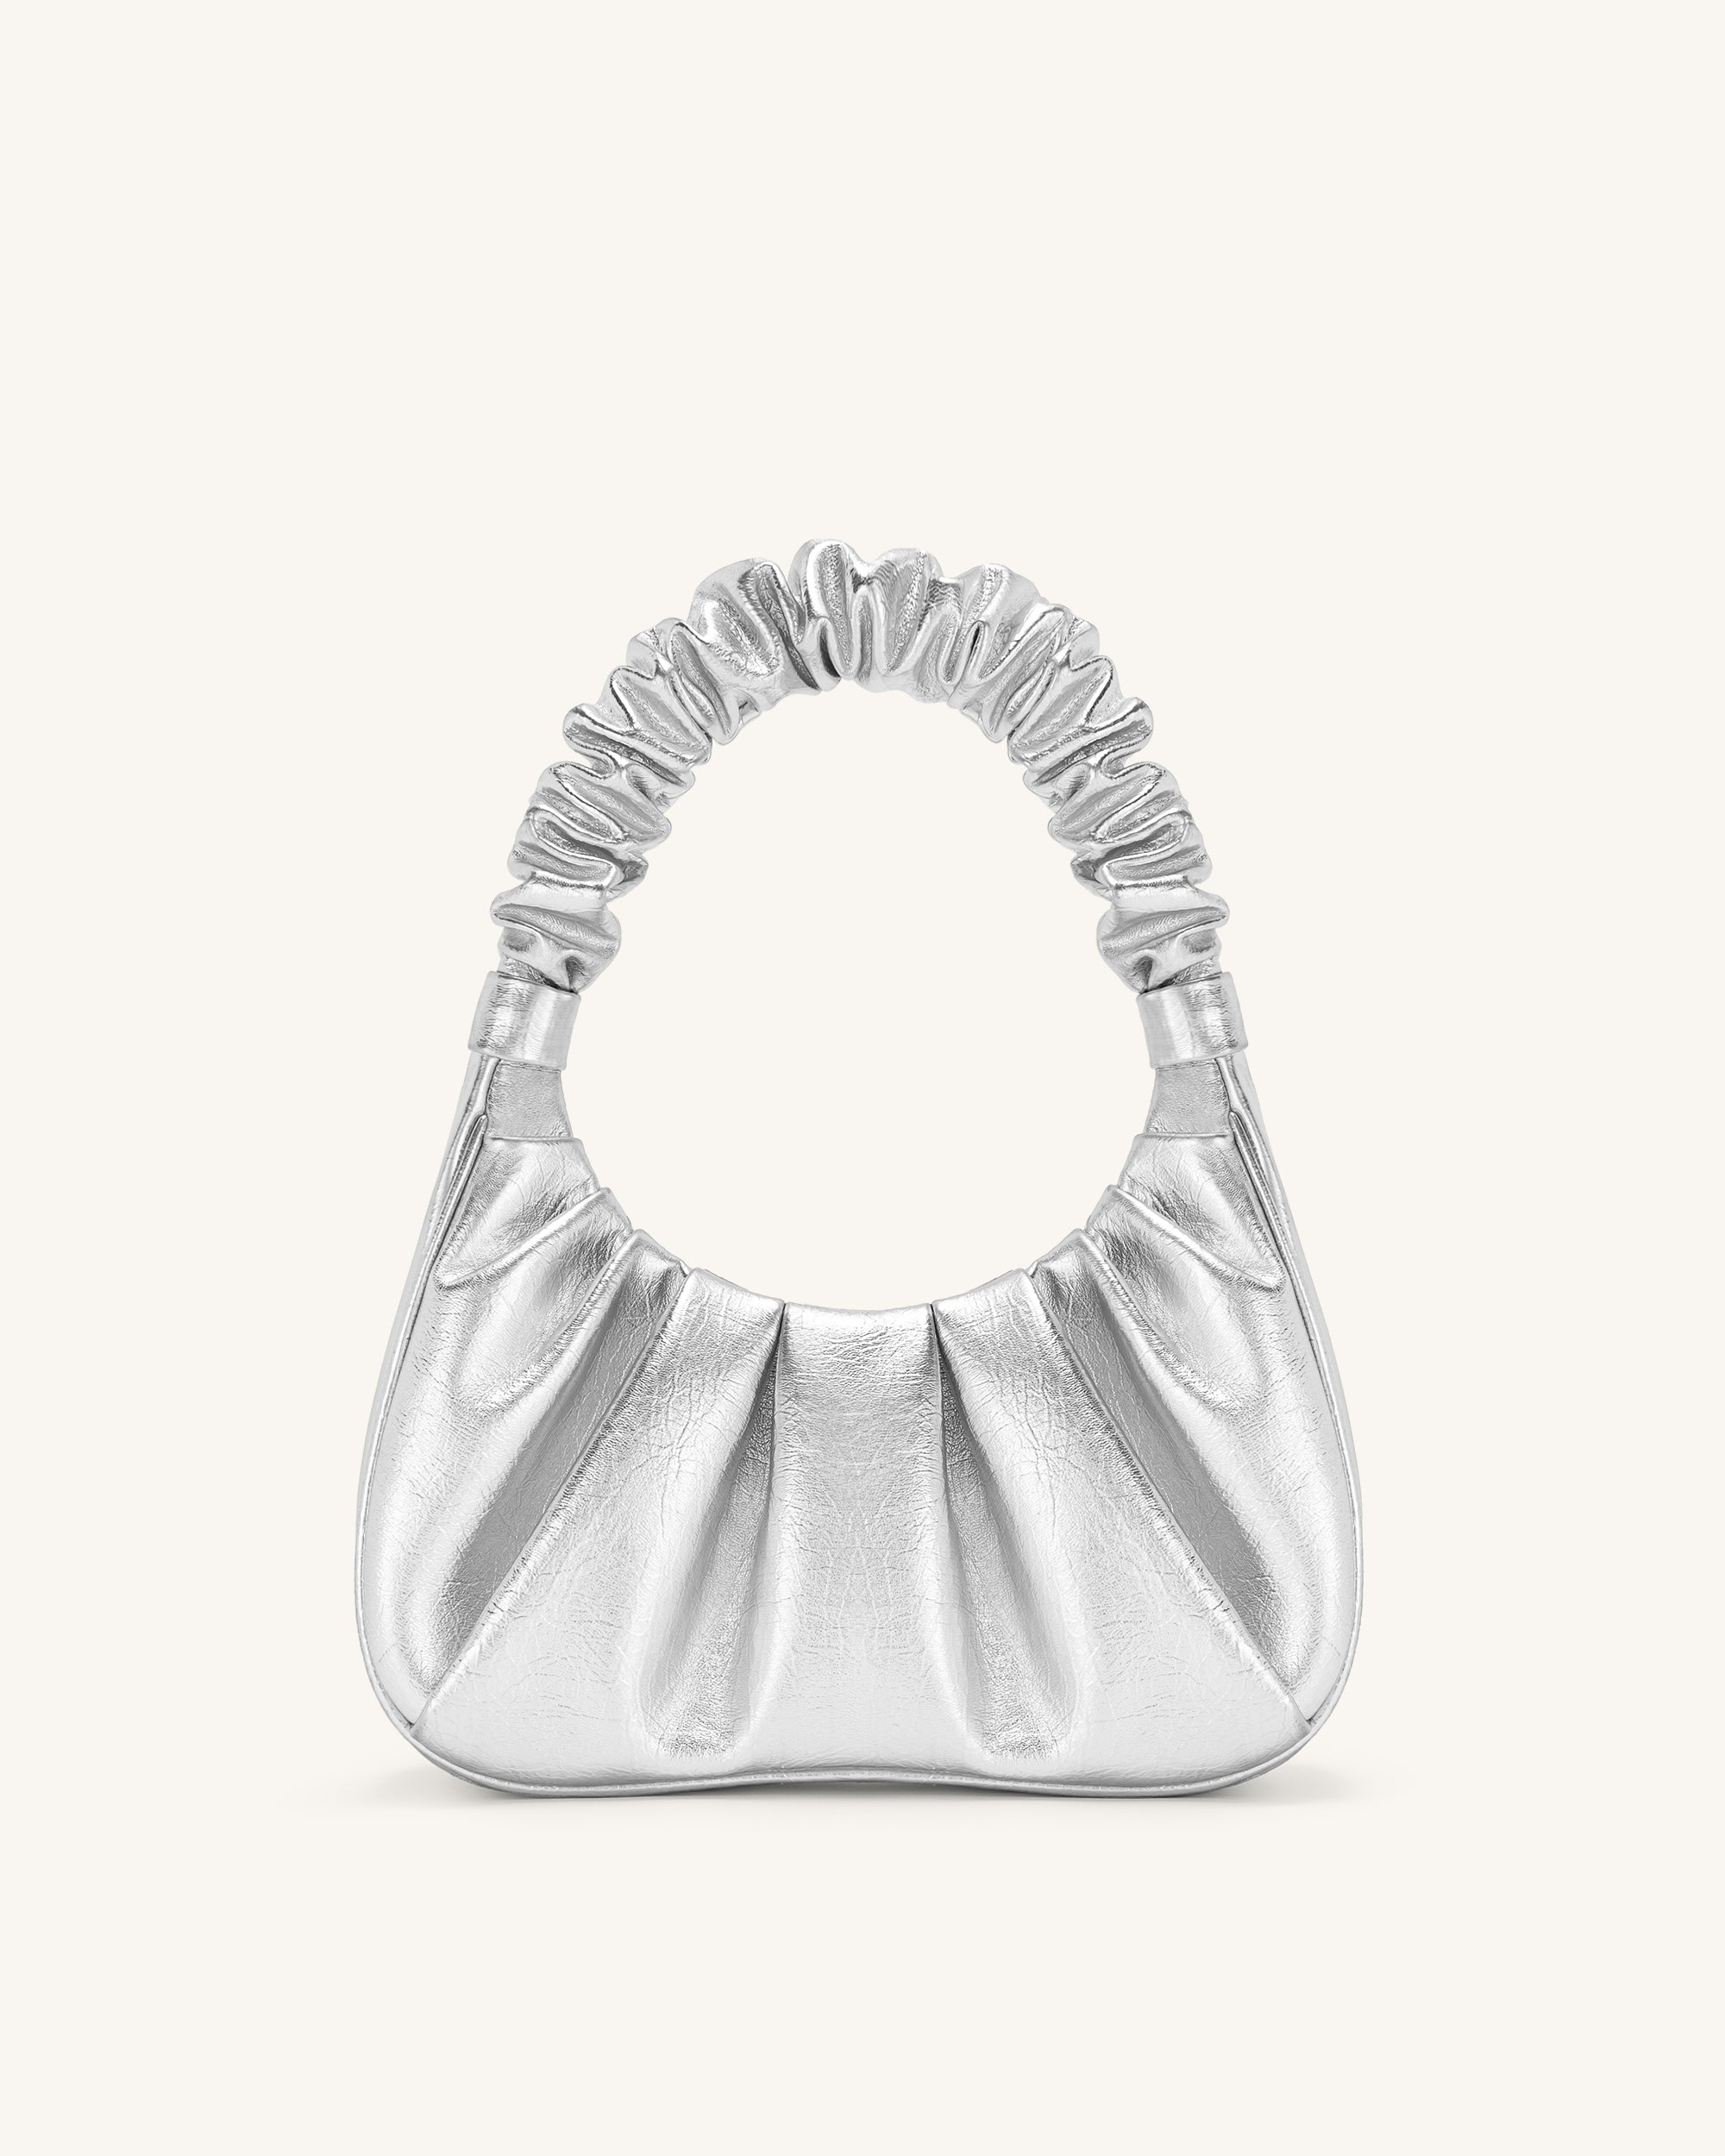 Gabbi Metallic Ruched Hobo Handbag - Silver Online Shopping - JW Pei